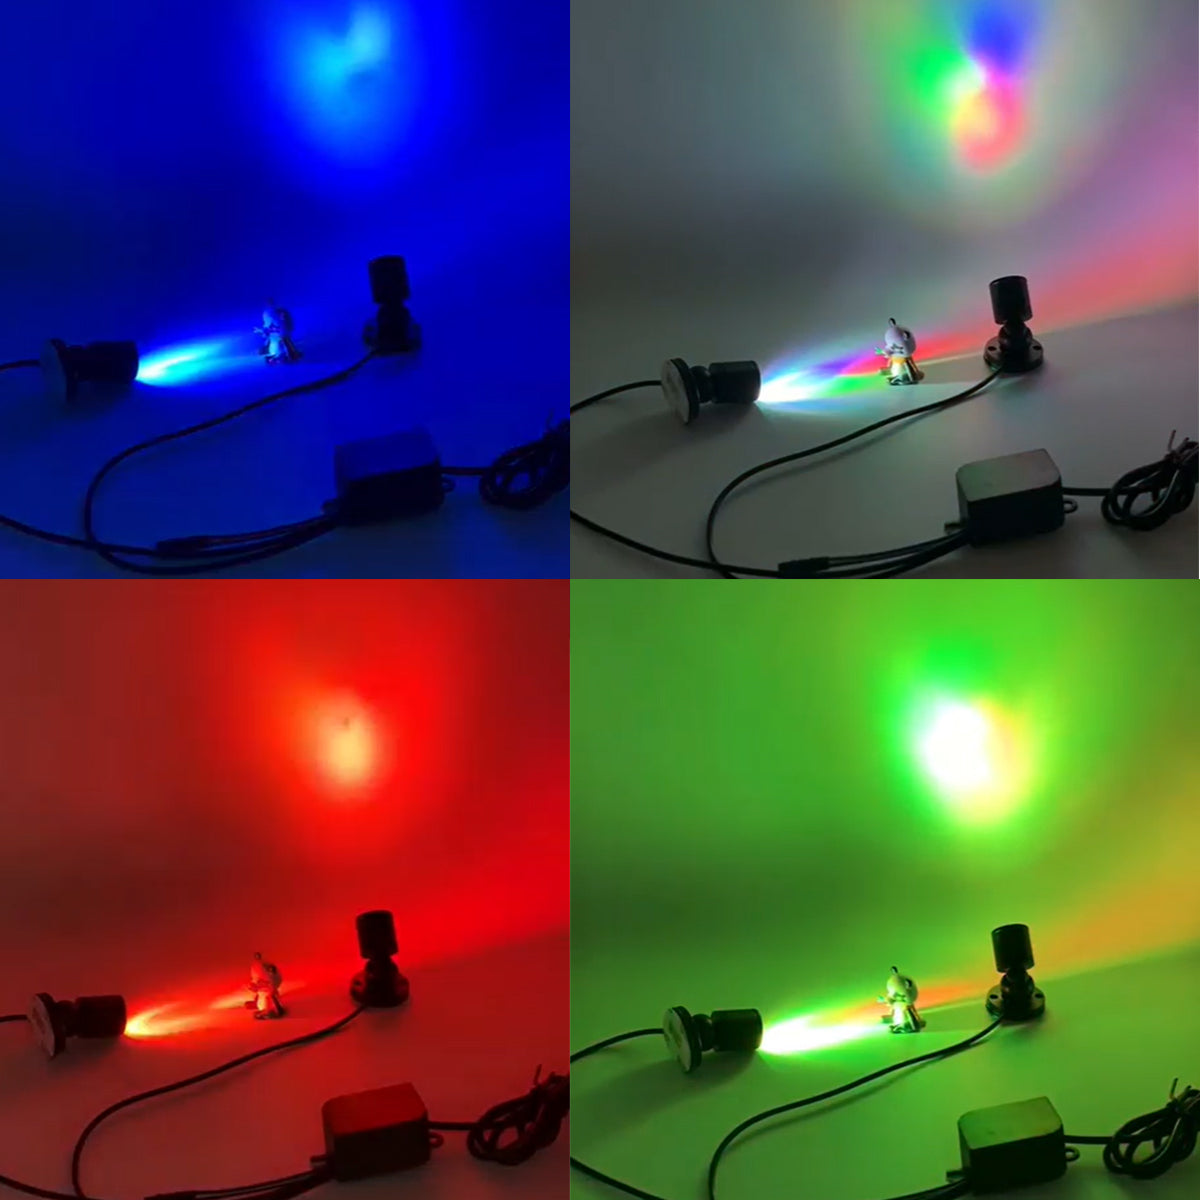 FSLiving 発光ユニット(RGB色) リモコン付き ミニスポットライト 角度調節可 ジュエリー ショーケース ディスプレイ 照明器具 ブラックシェル LEDユニット 電飾キット ミニ植物ライト LEDスポットライト